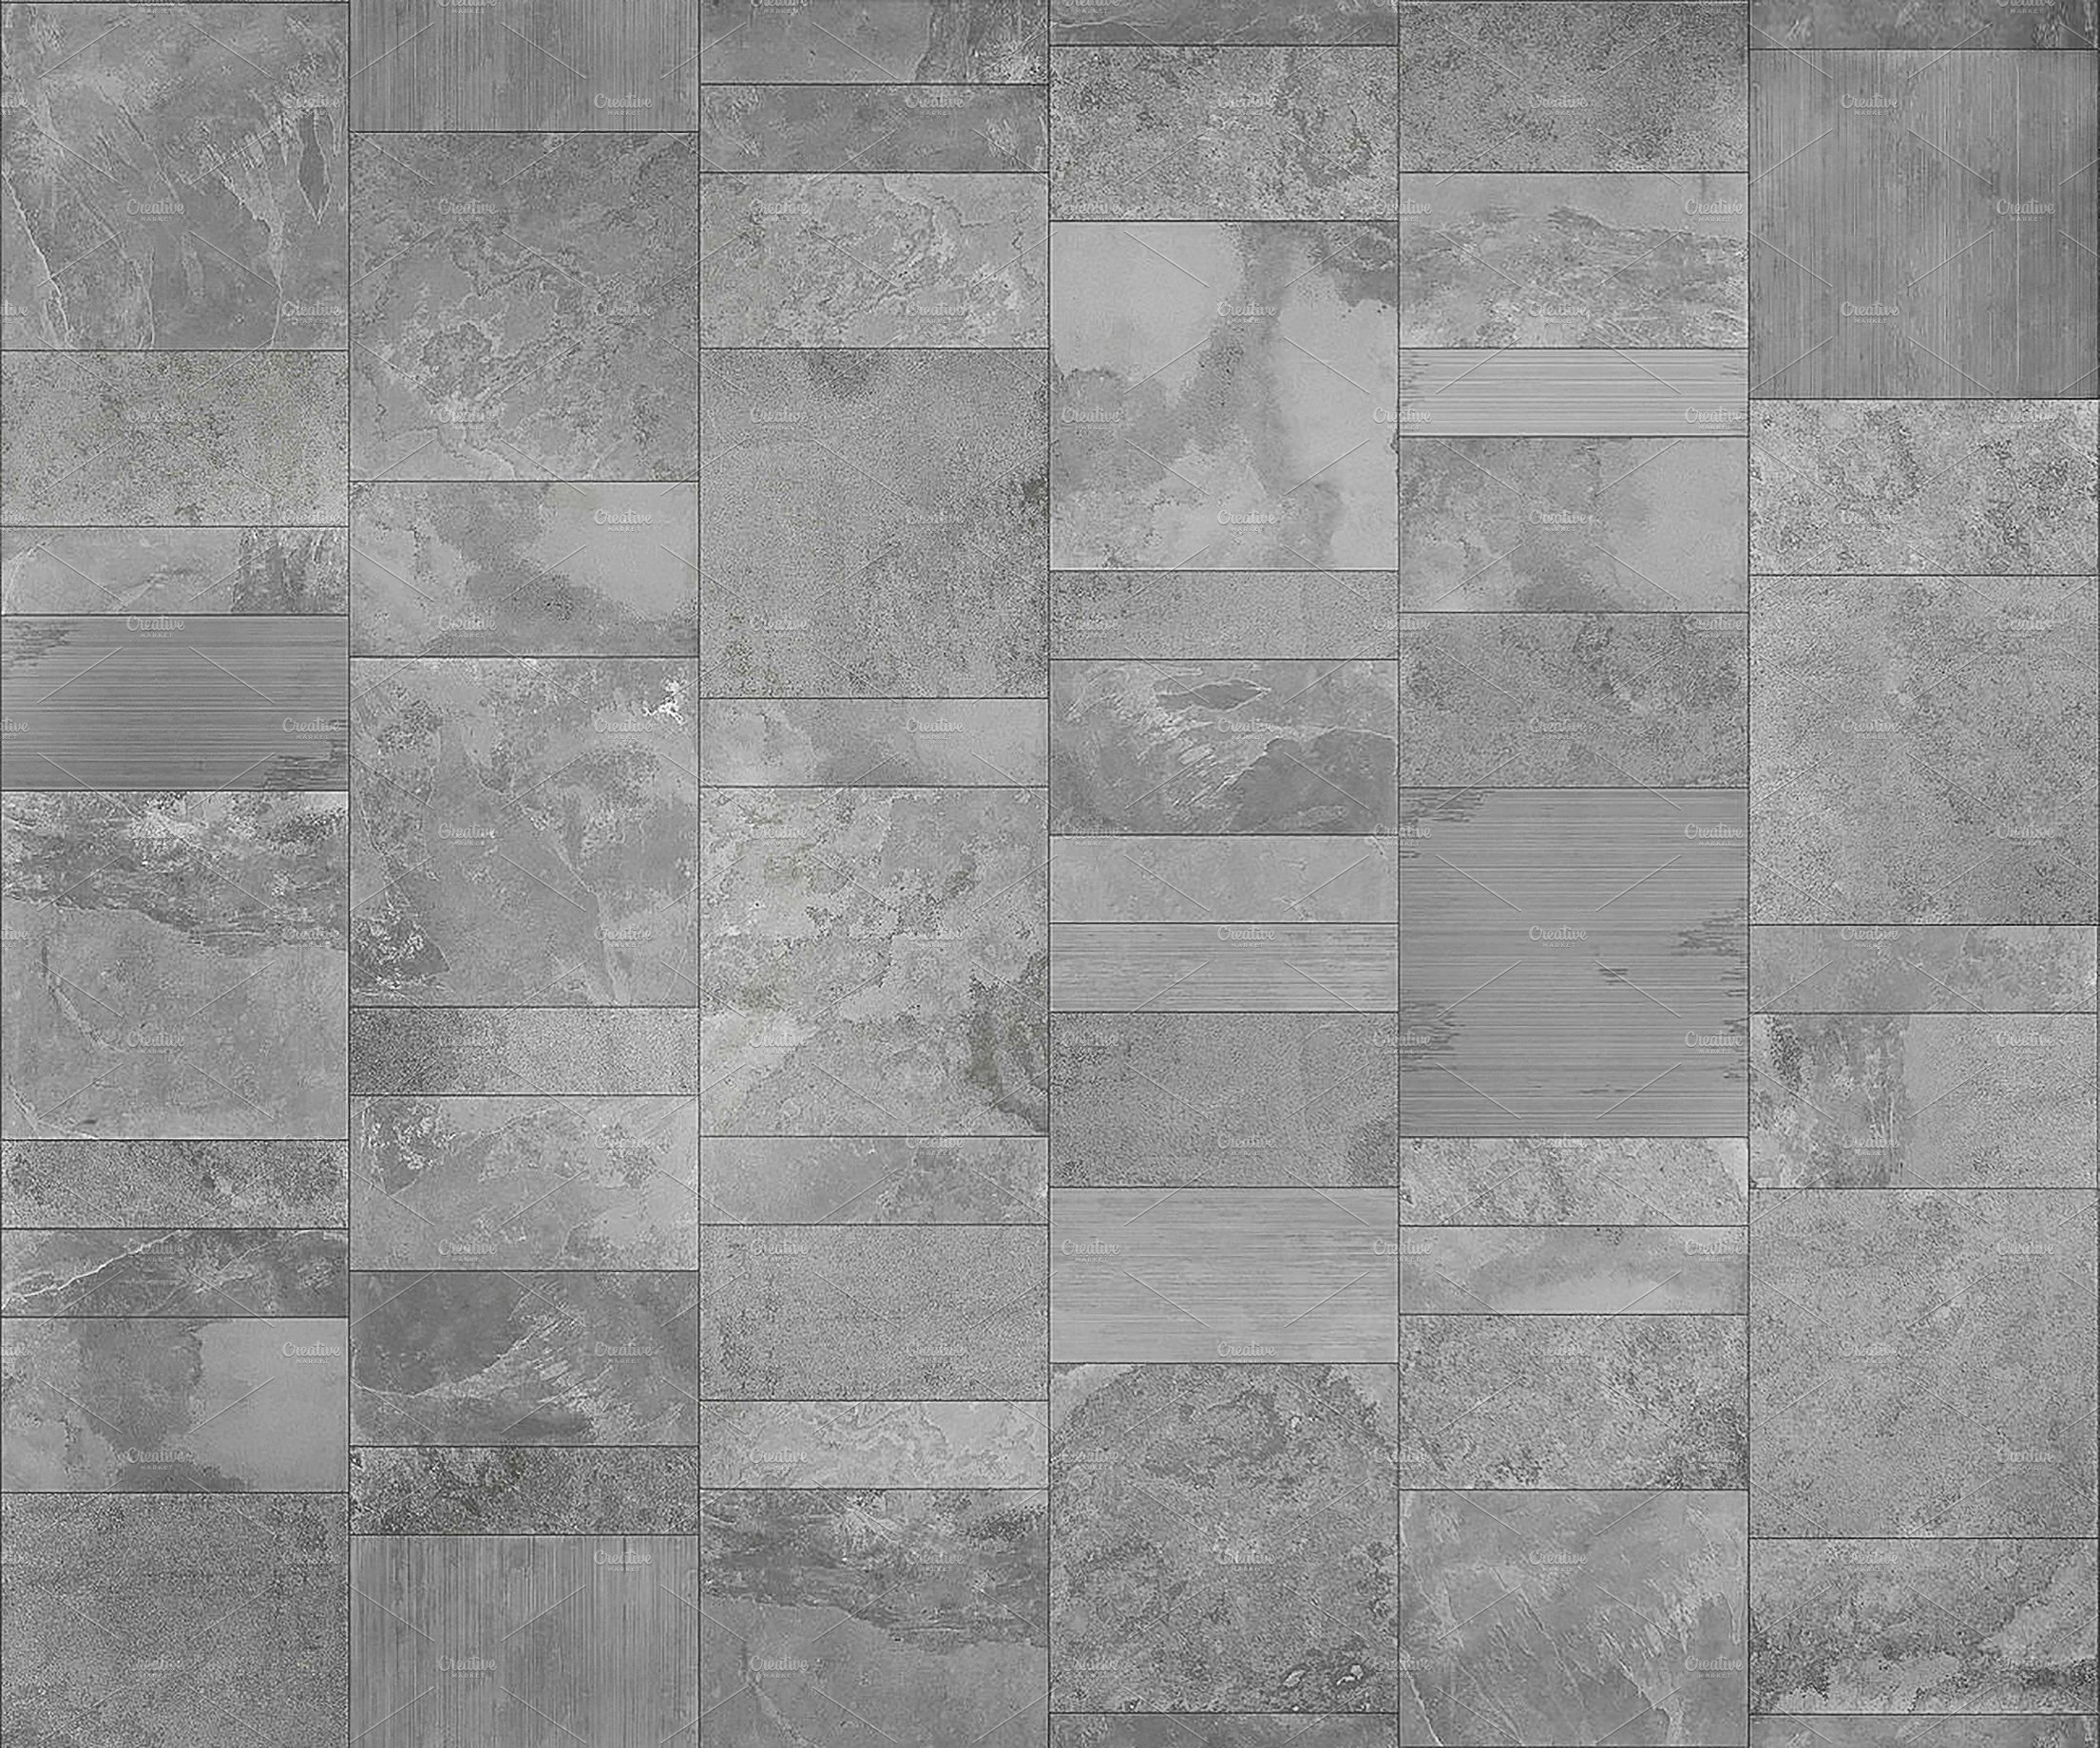 Slate tile texture ~ Textures ~ Creative Market